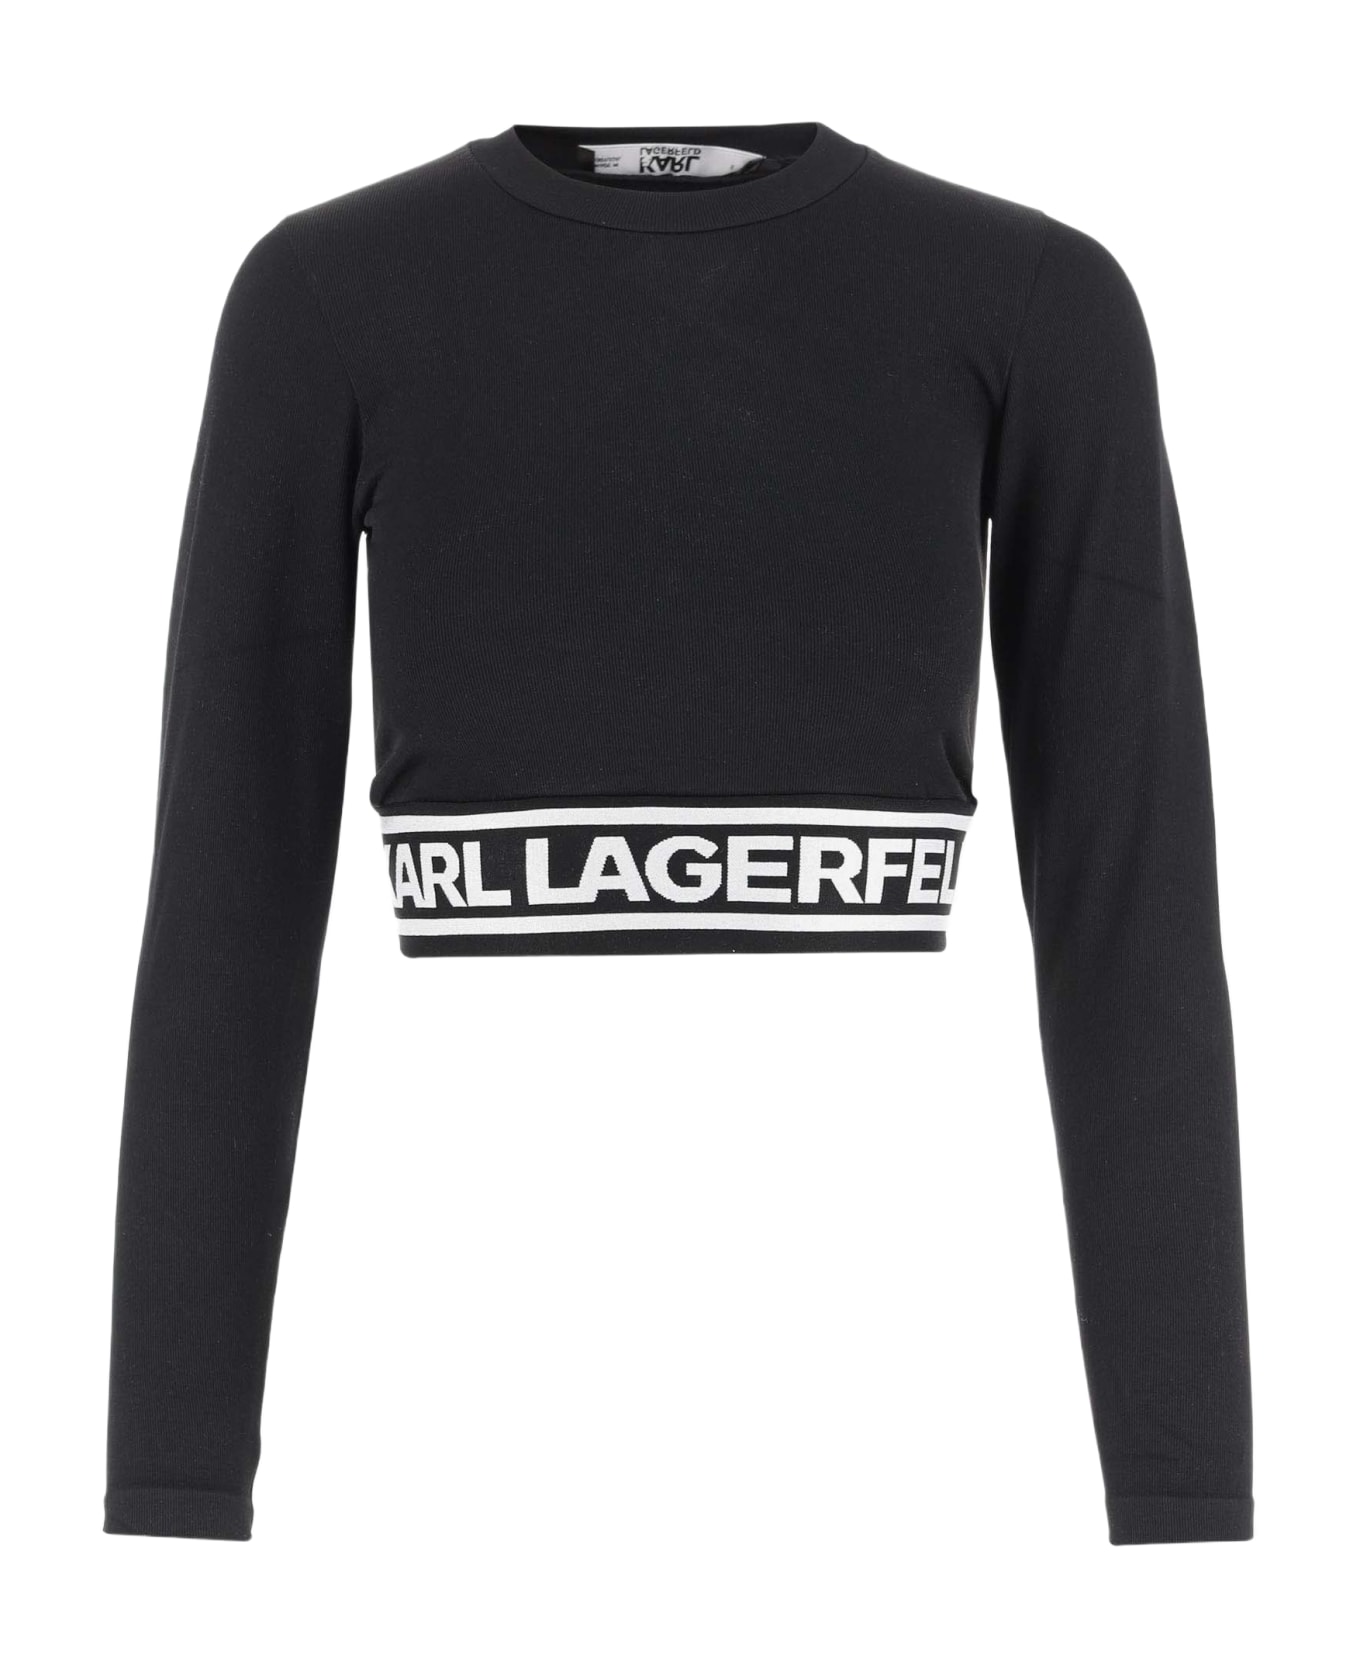 Karl Lagerfeld Stretch Acrylic Crop Top - Black